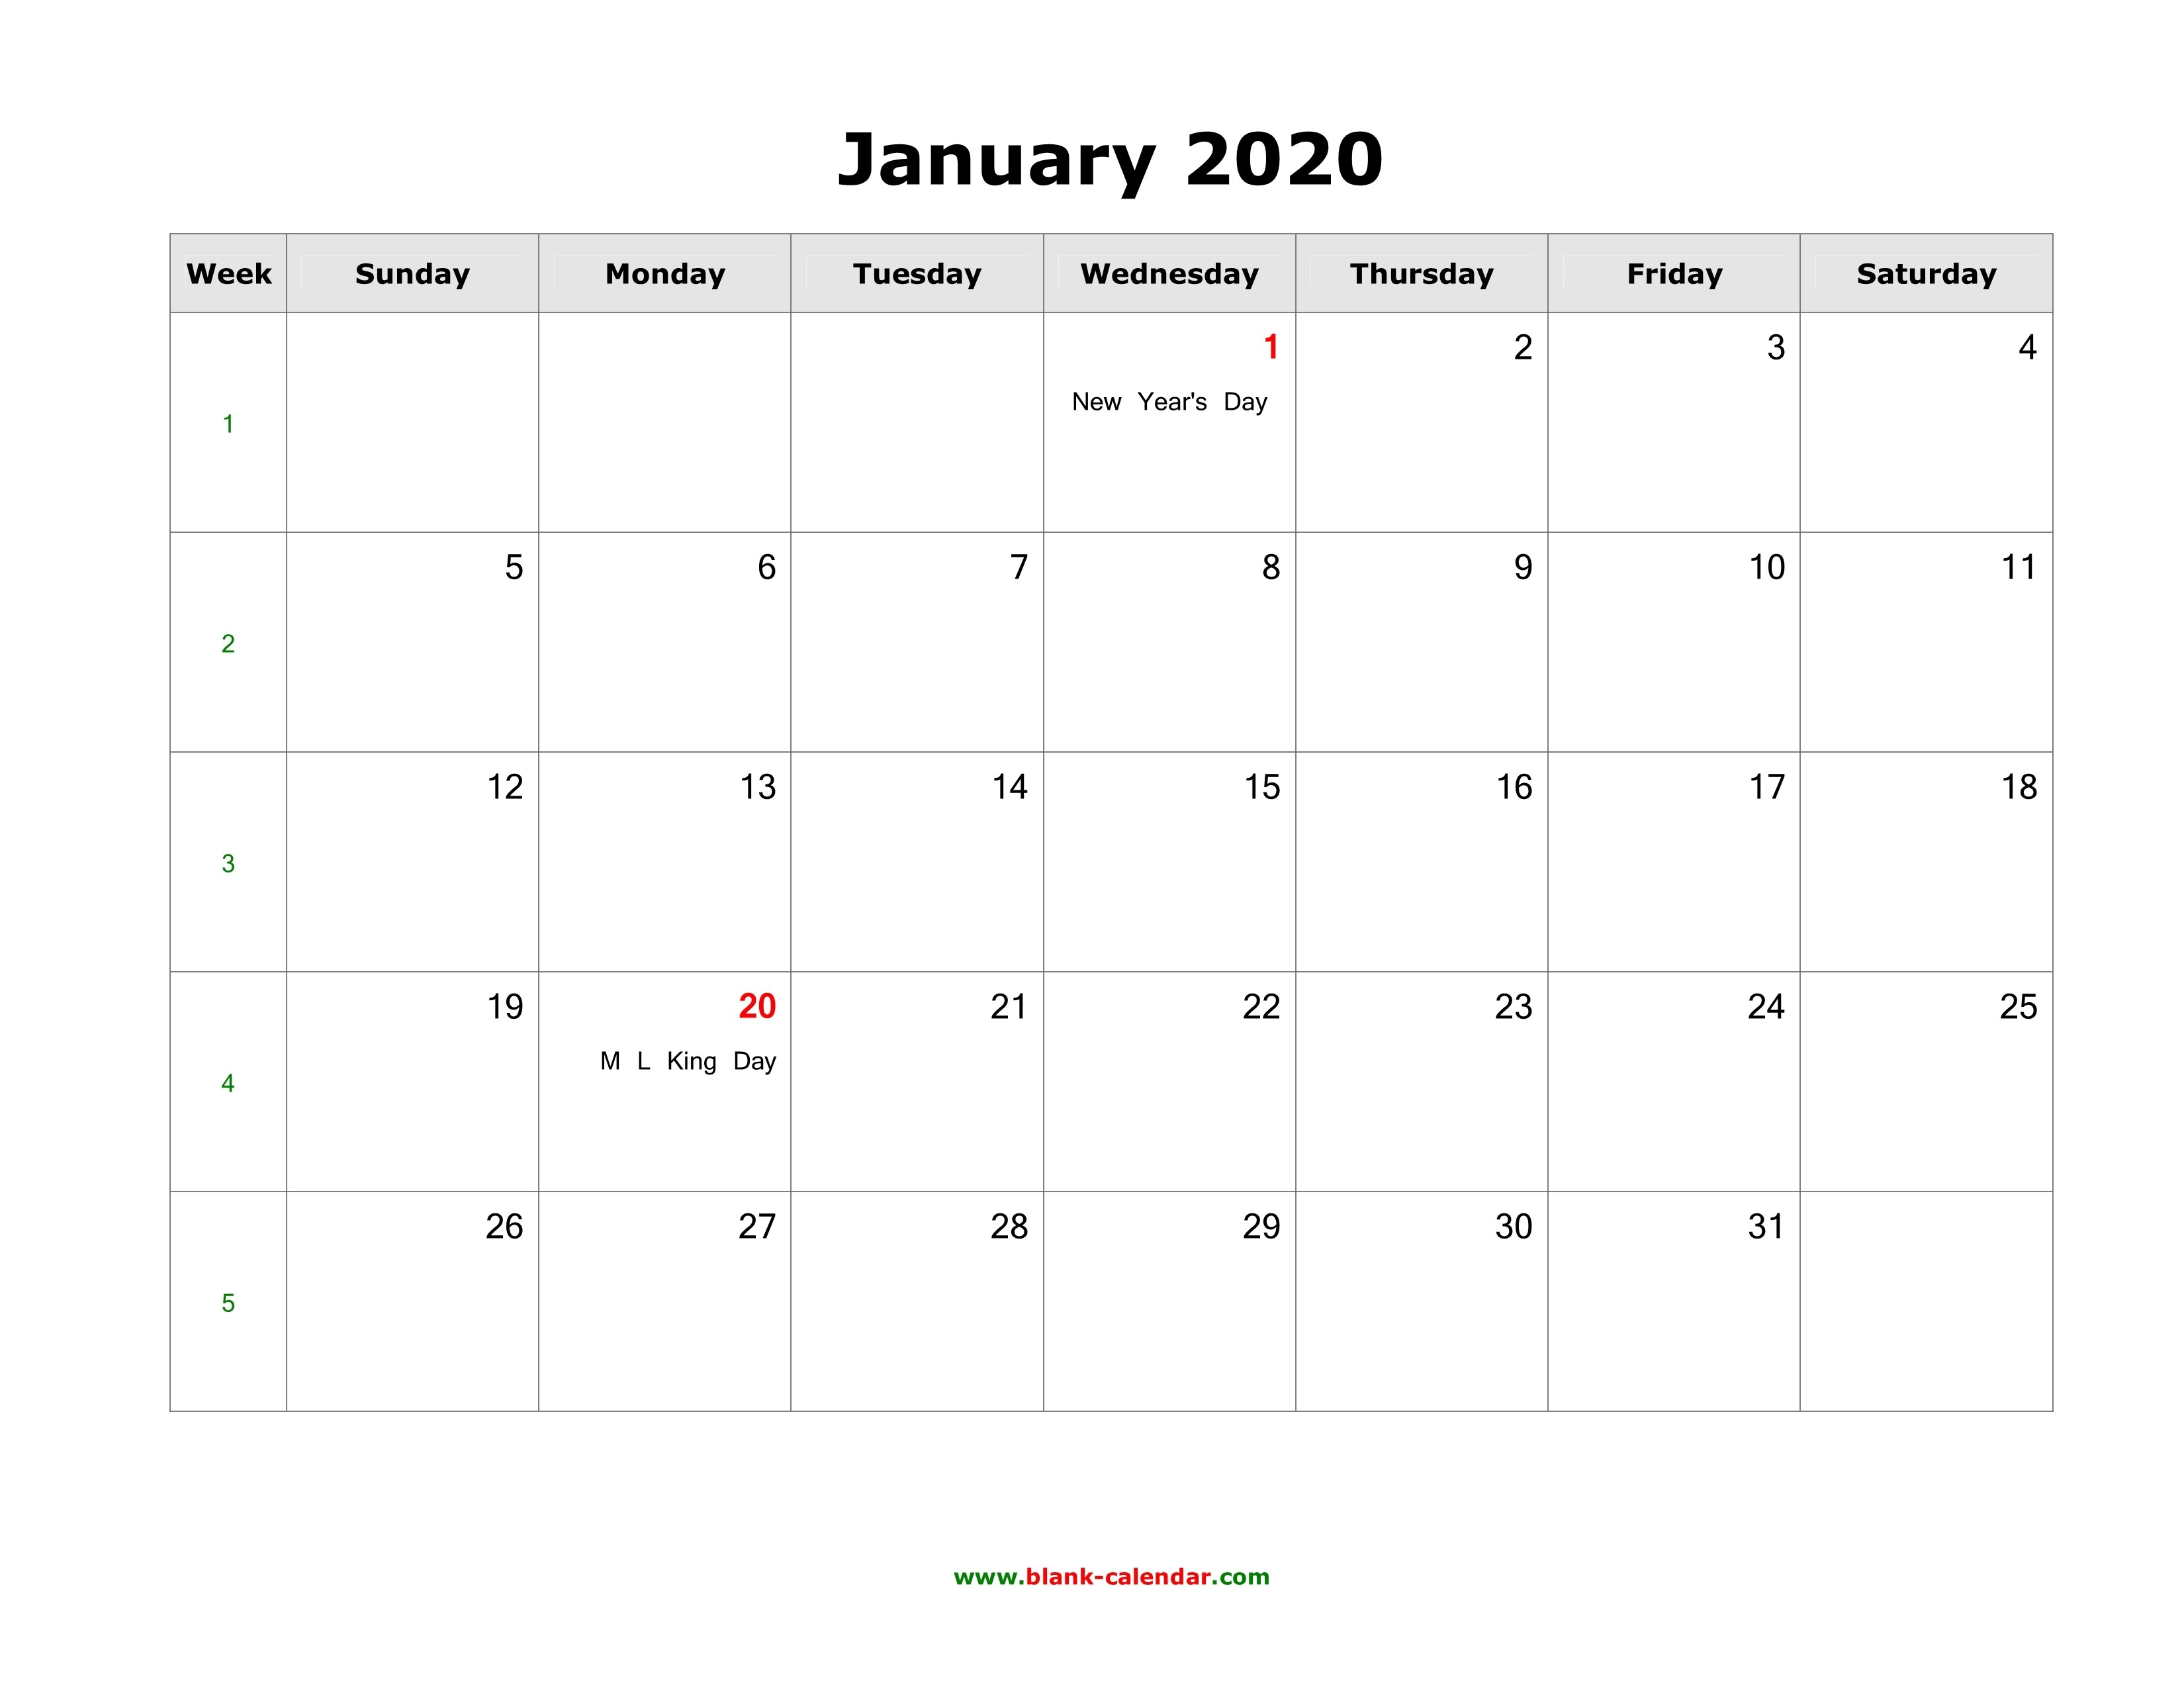 January 2020 Blank Calendar | Free Download Calendar Templates-Printable January 2020 Calendar With Holidays